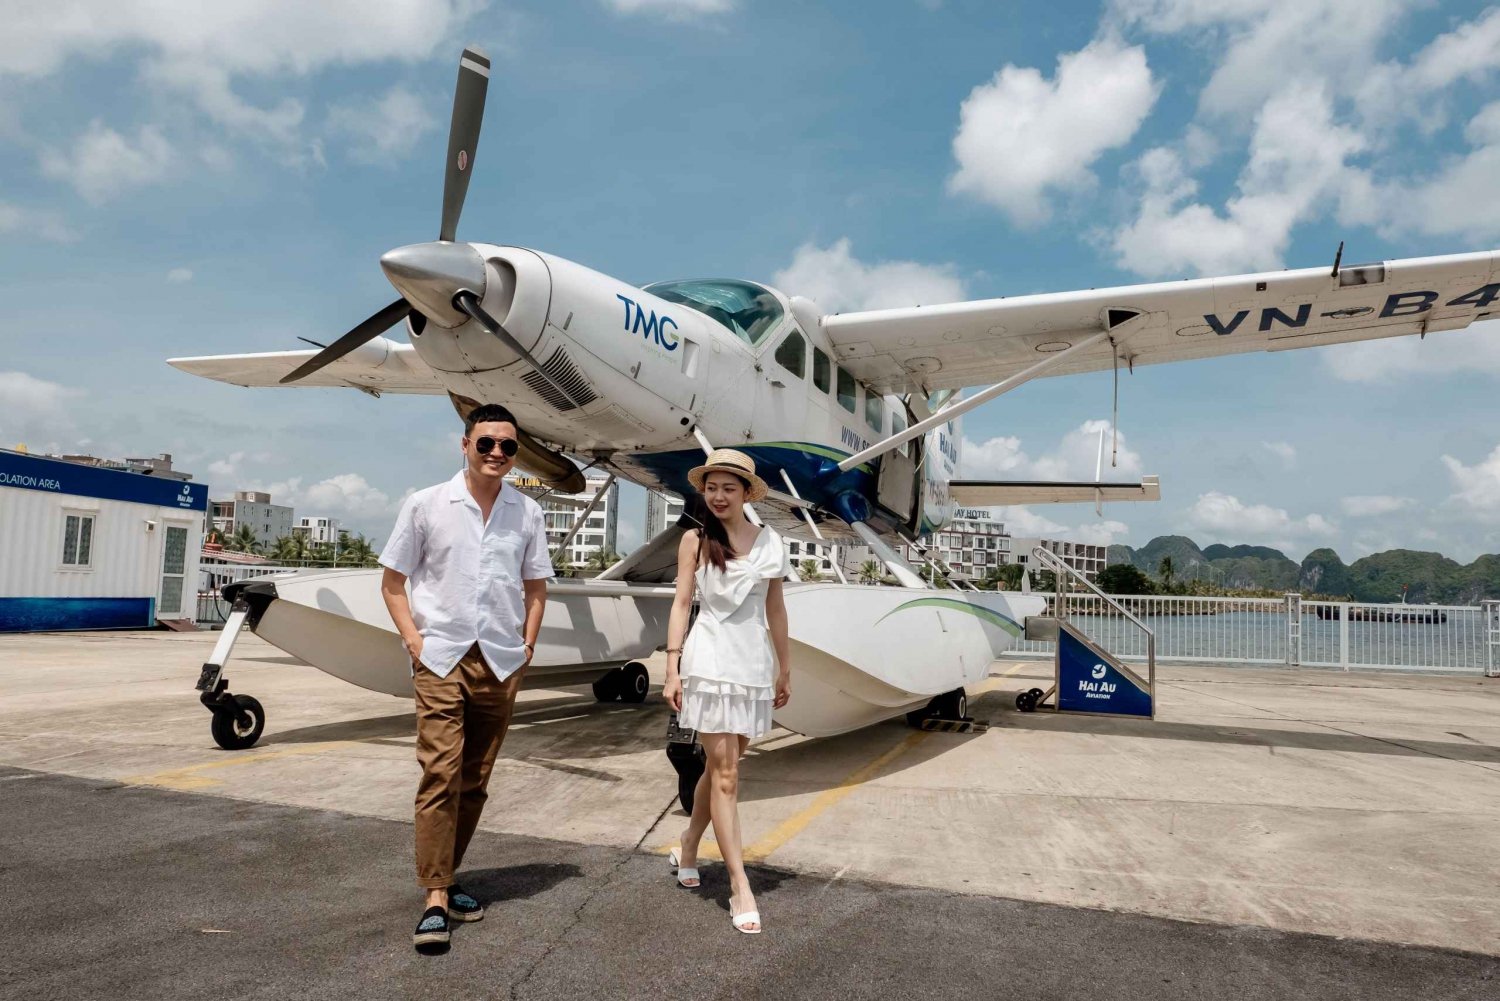 Ha Long Bay Scenic Seaplane Tour - 25 Minuten von SKY